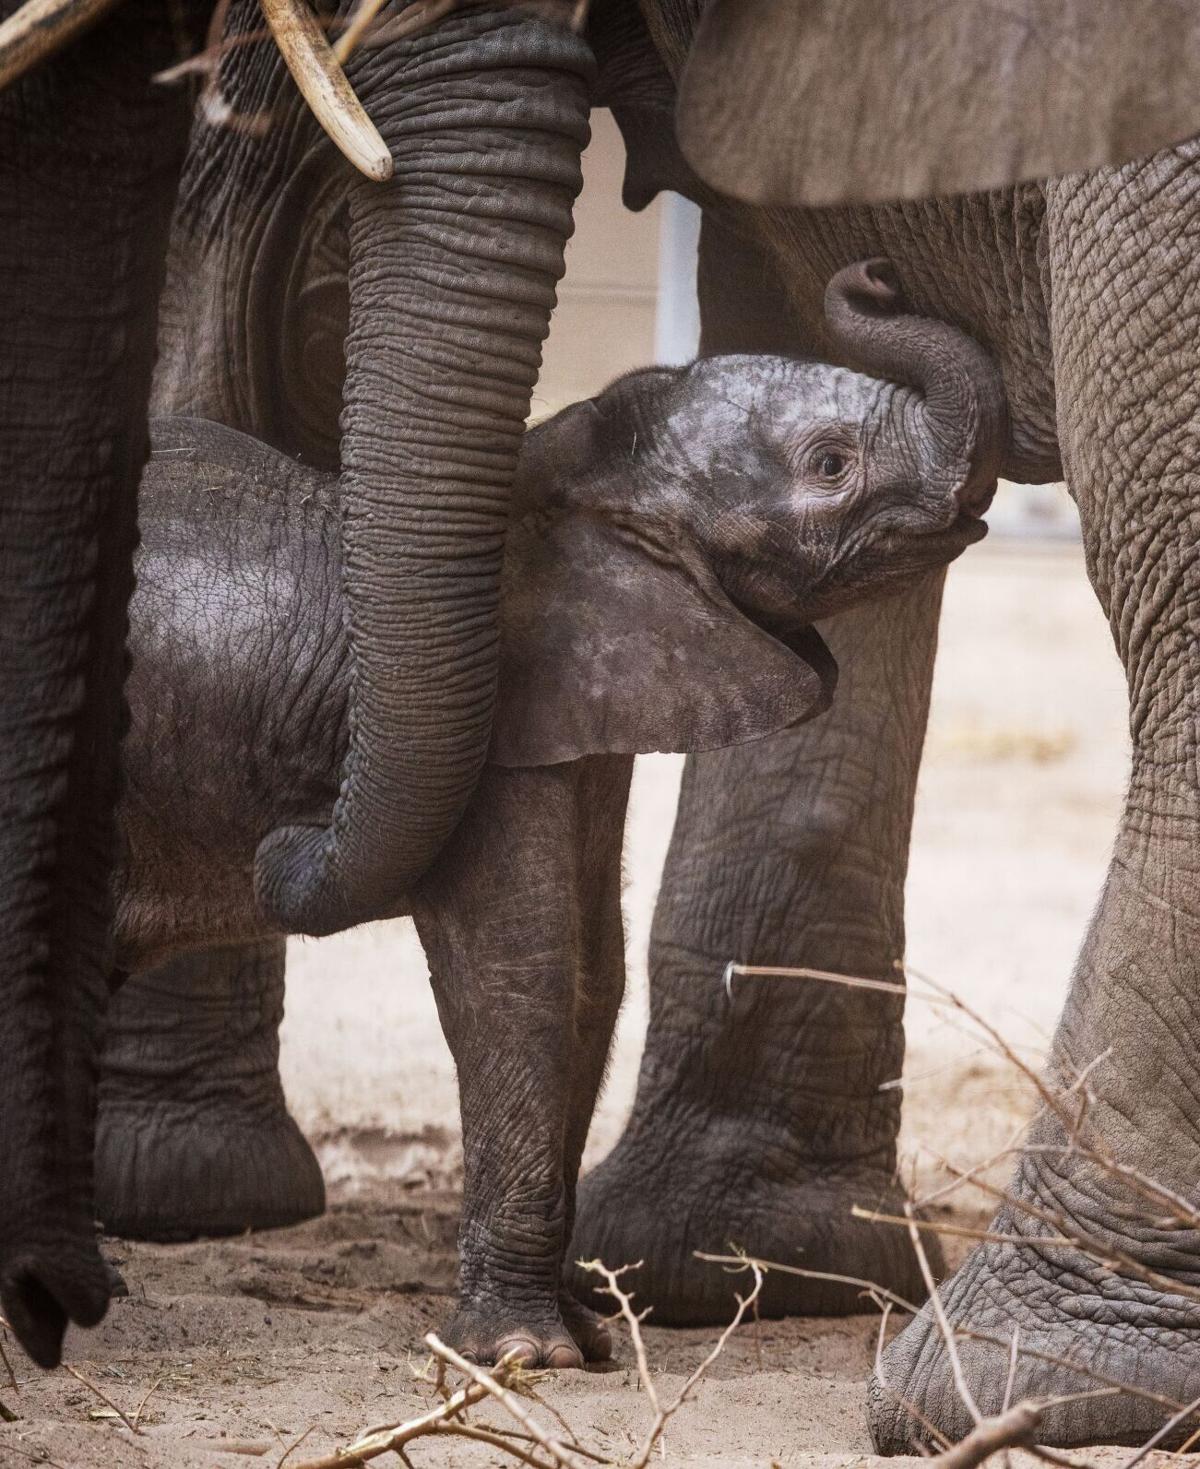 Omaha zoo expecting fourth baby elephant